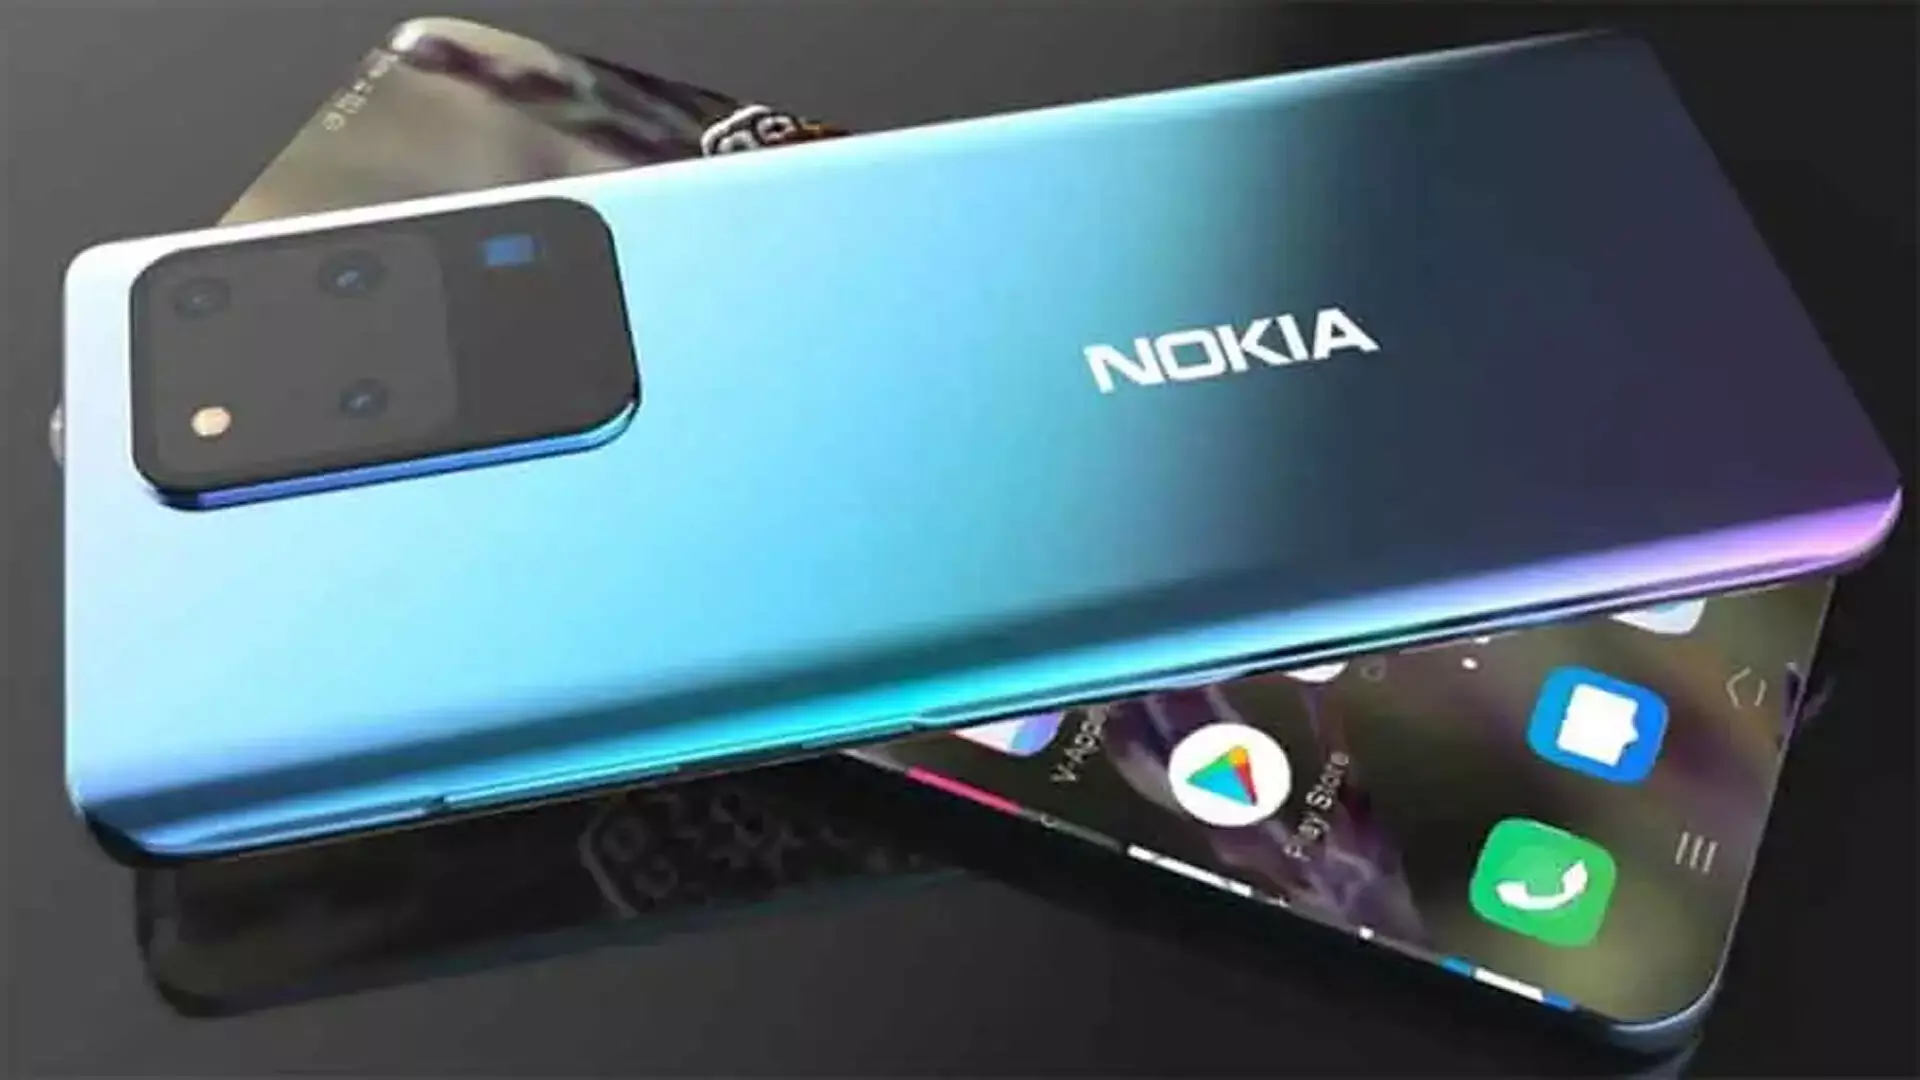 Nokia Evolve: पॉवरफुल धांसू 6000mAh का बैटरी बेकअप